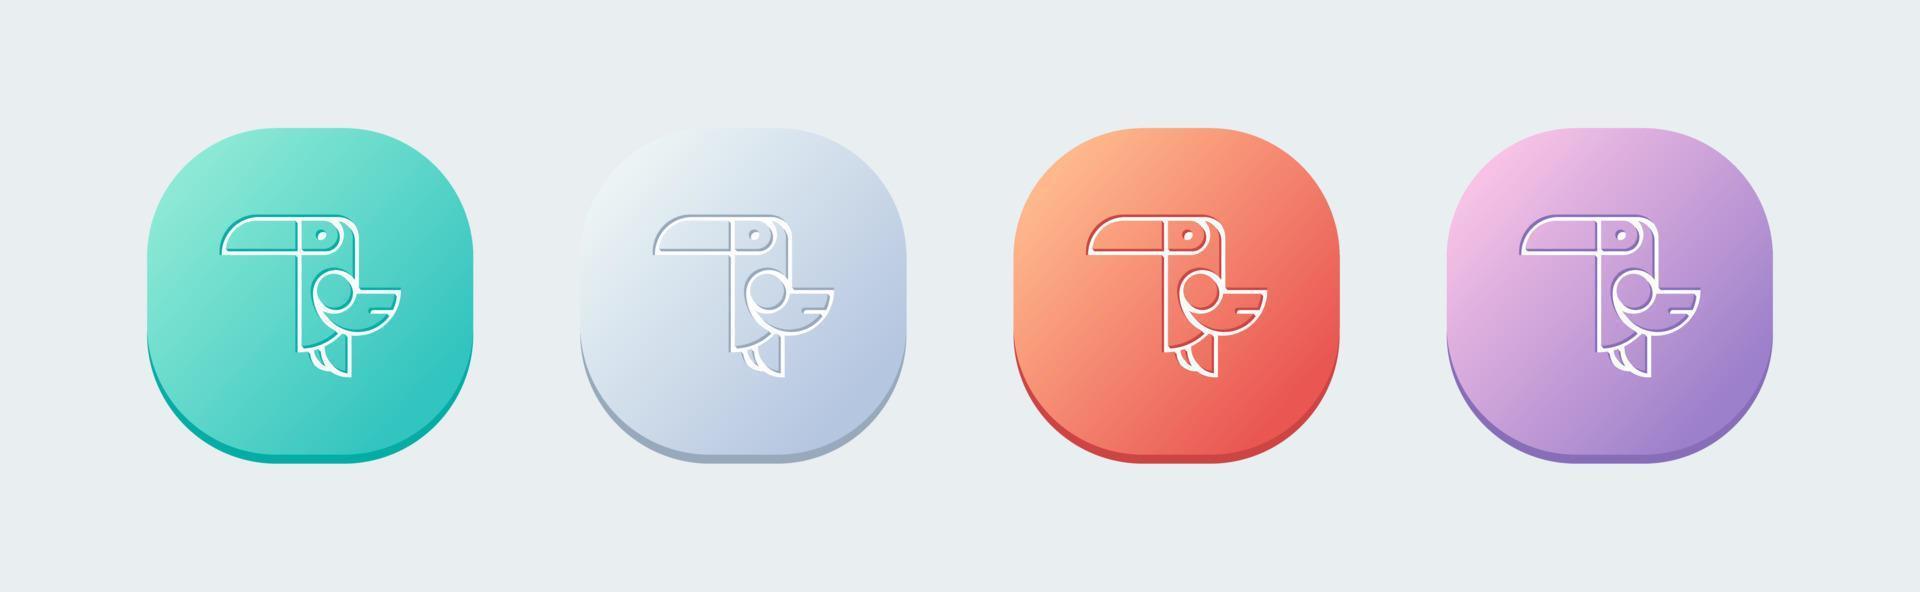 Toucan line icon in flat design style. Simple bird logotype vector illustration.